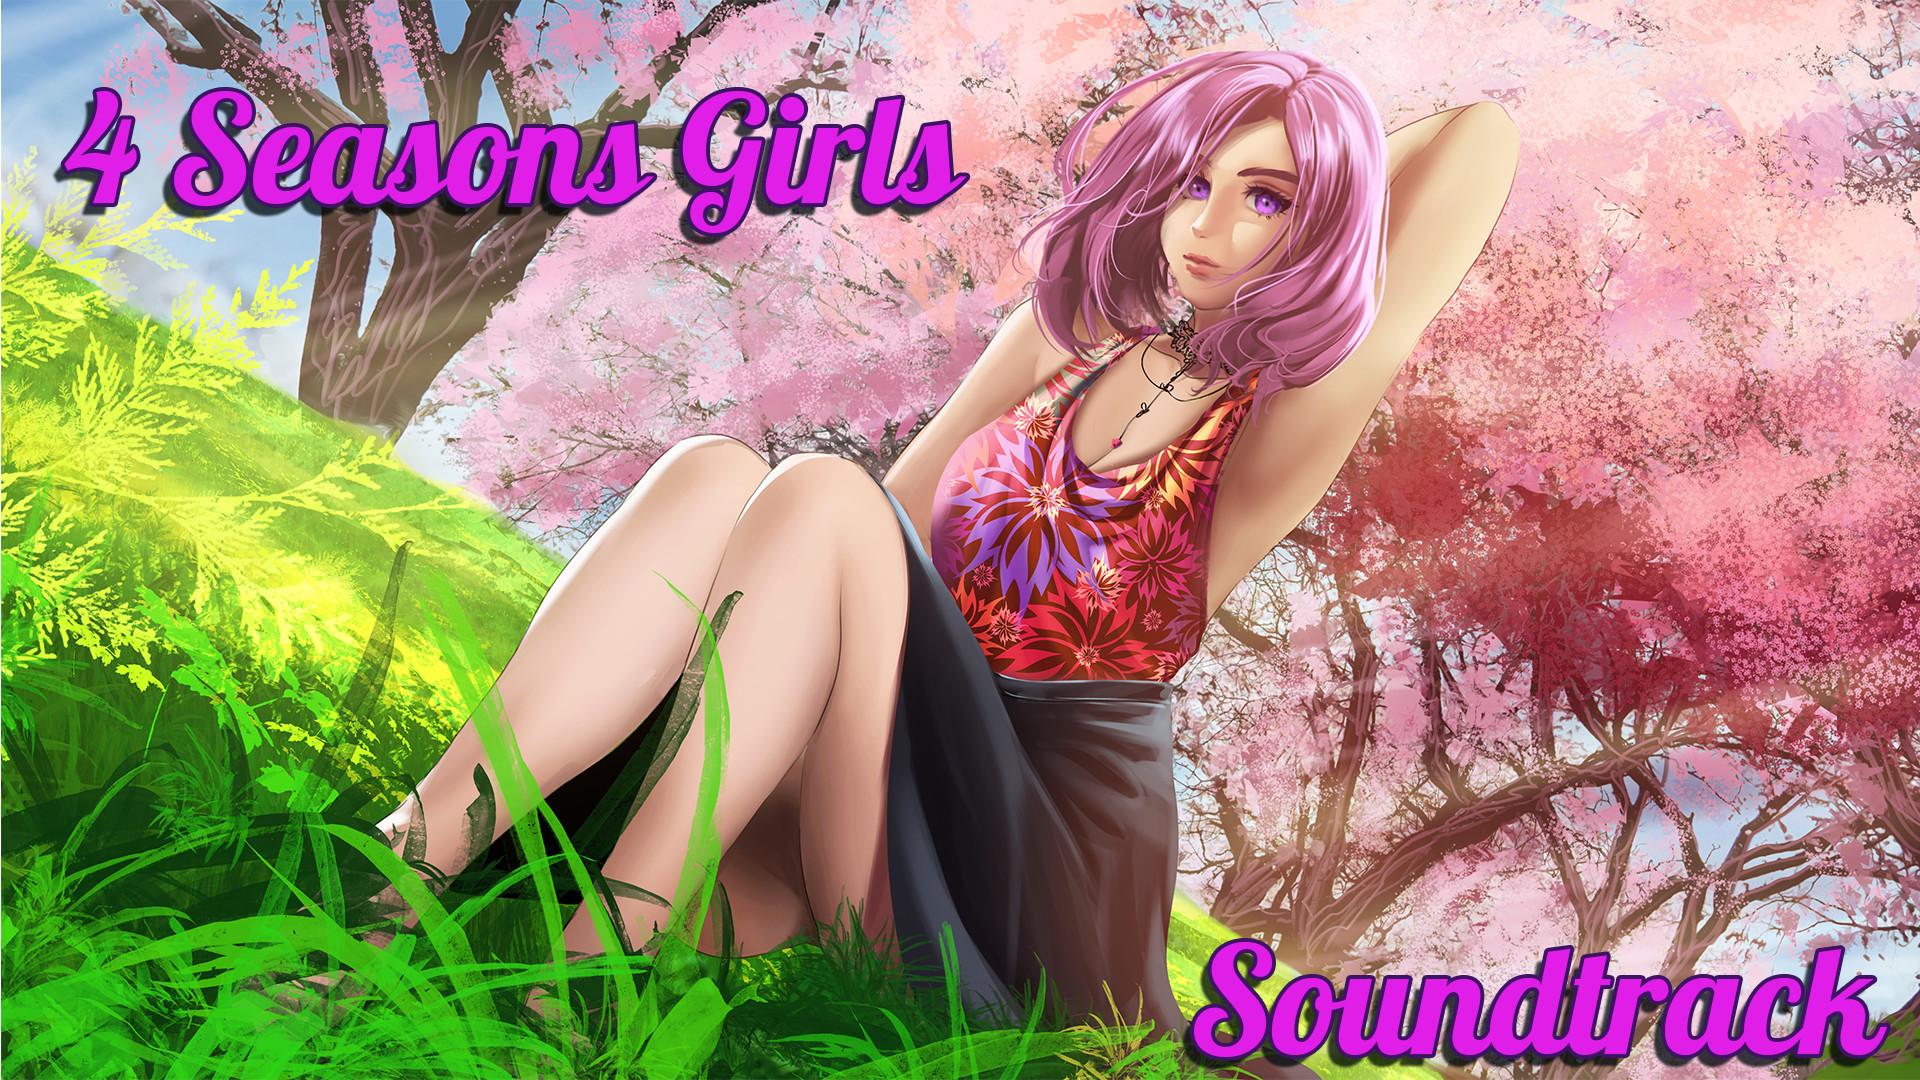 4 Seasons Girls Soundtrack Featured Screenshot #1